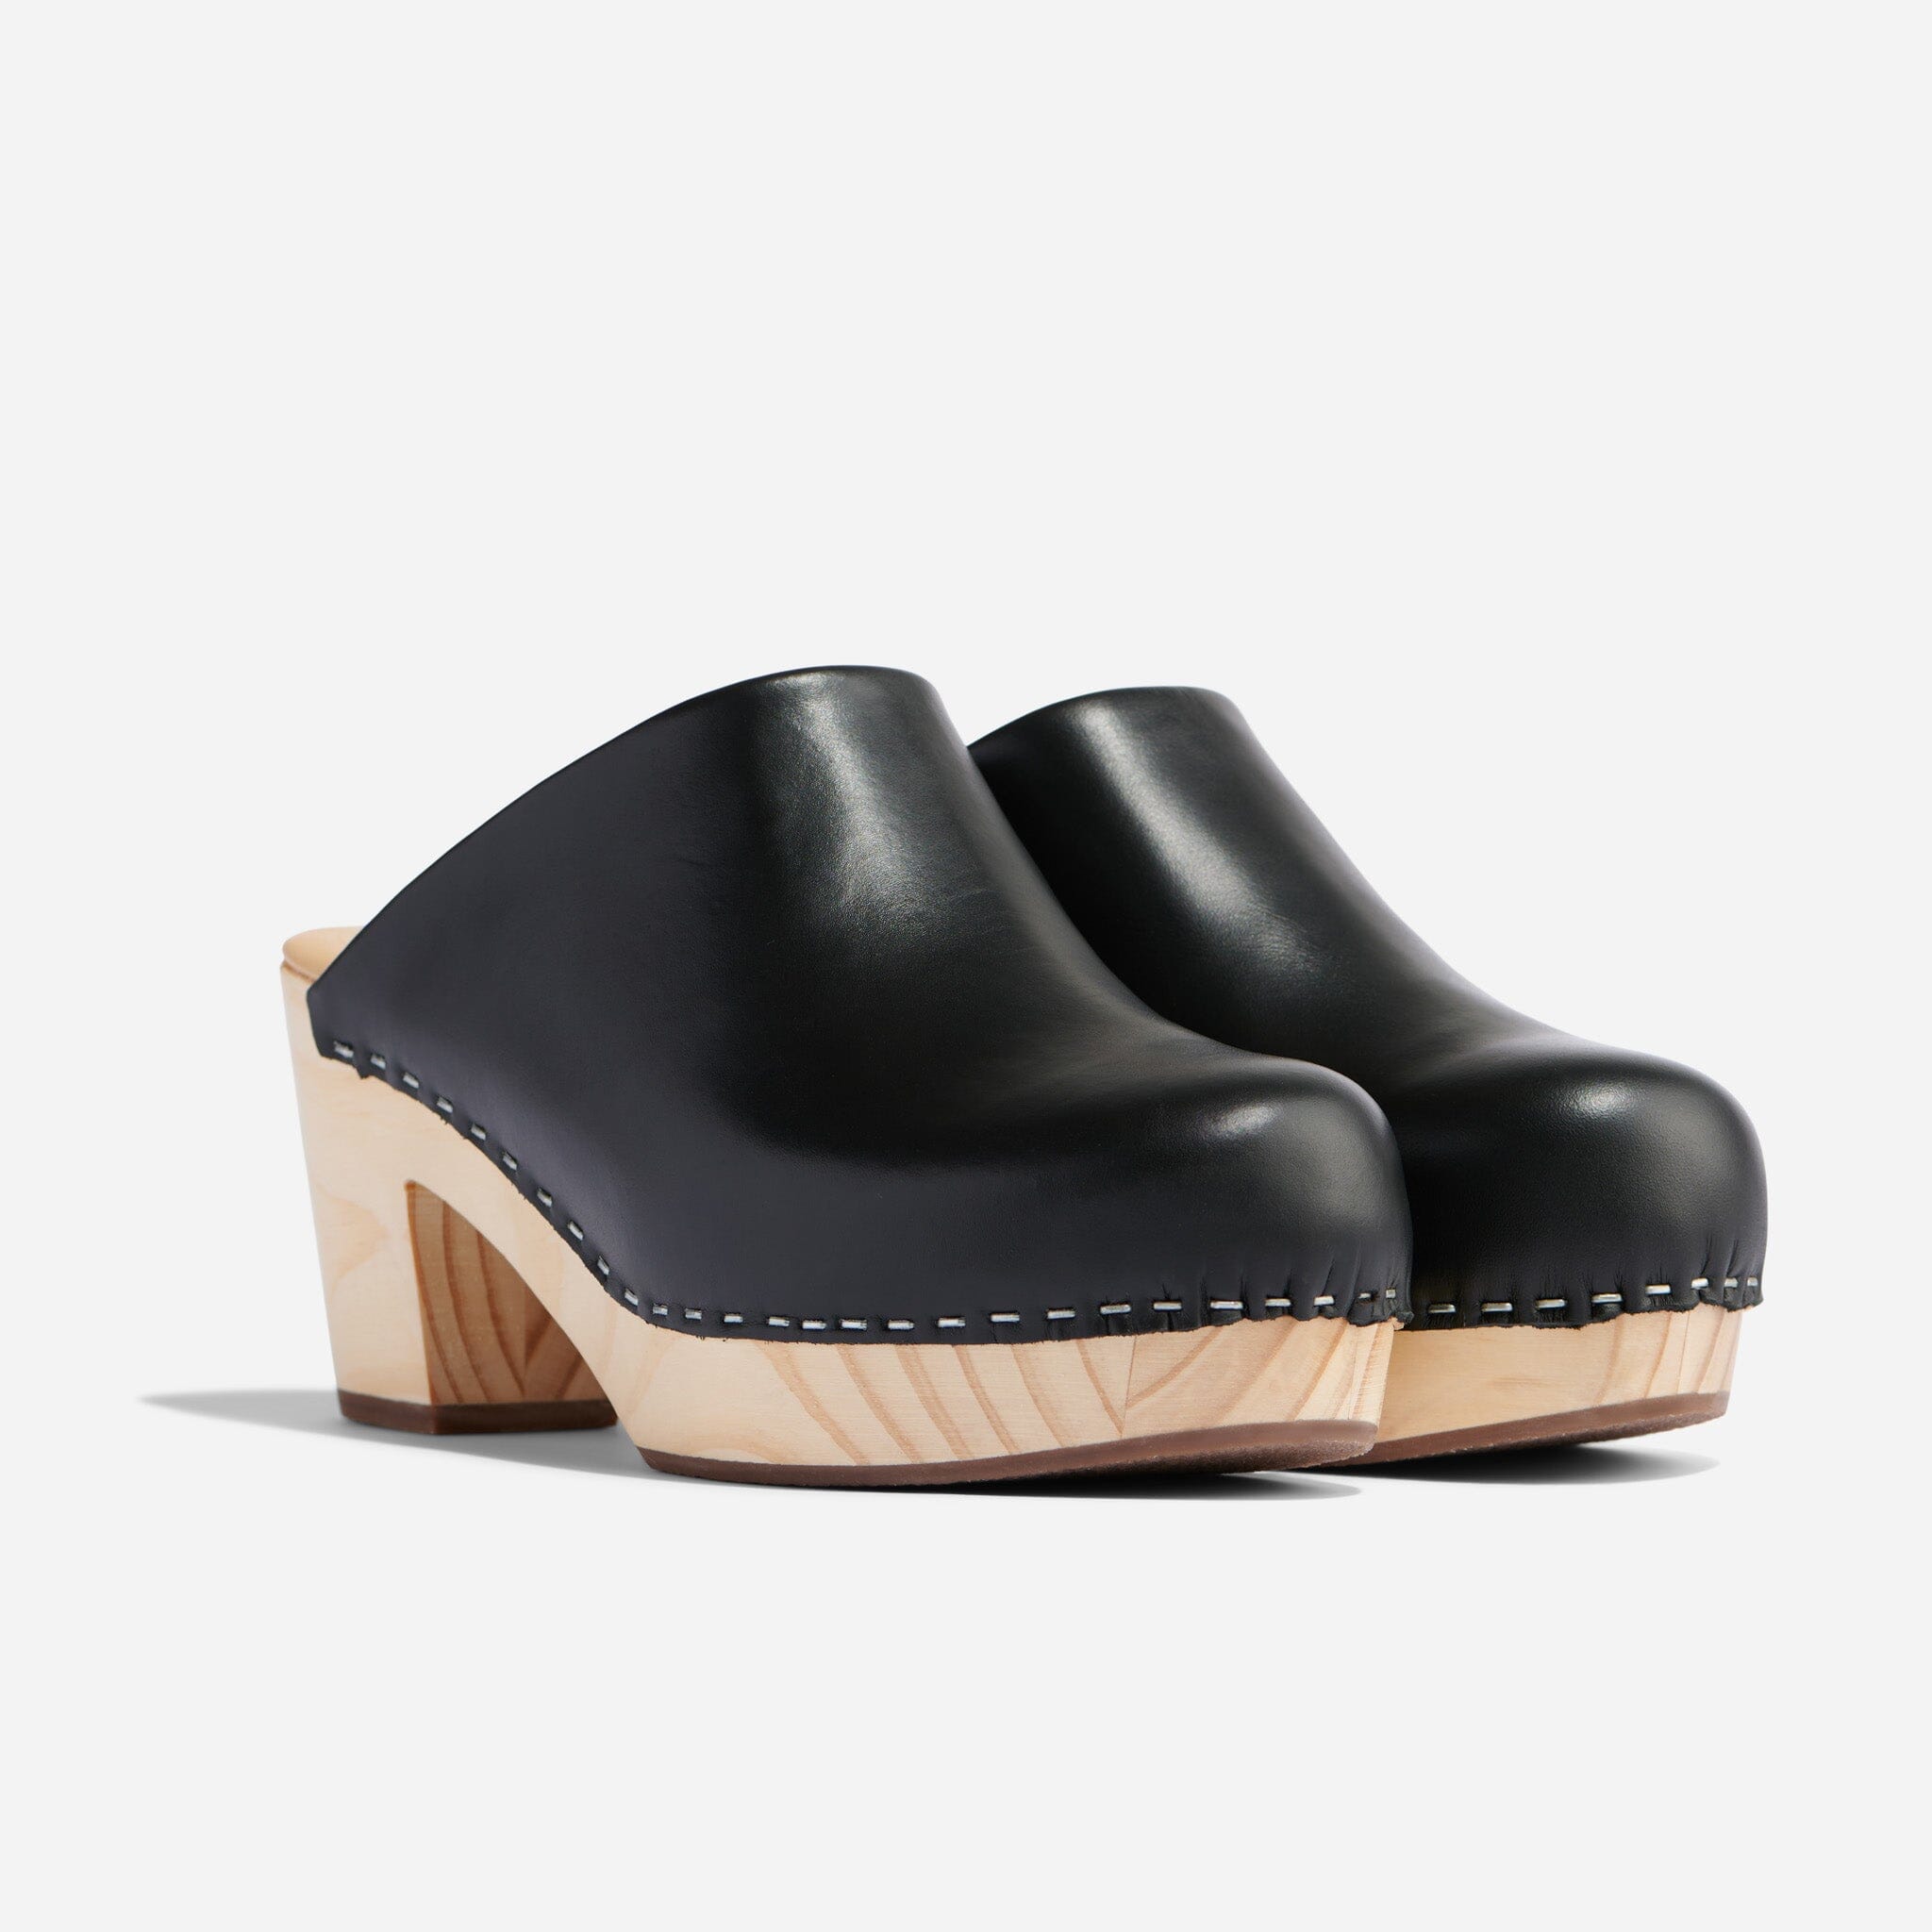 Buy TRYME Embellished Block Heel Sandals Comfortable & Trendy Party Heels  for Girls & Women at Amazon.in